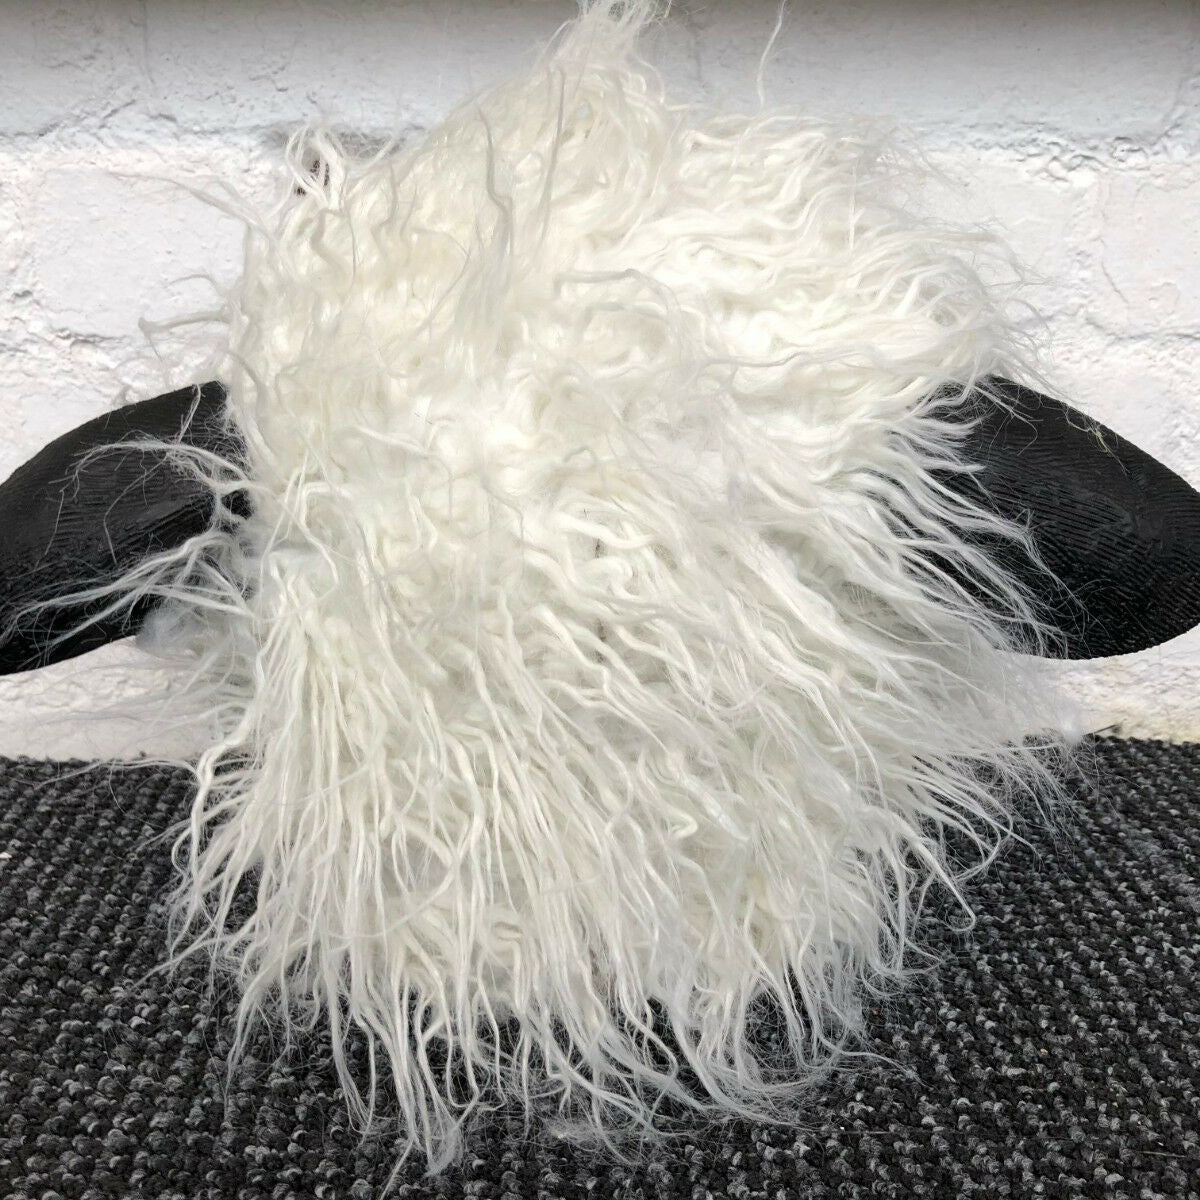 Woolly Sheep Head Mask.